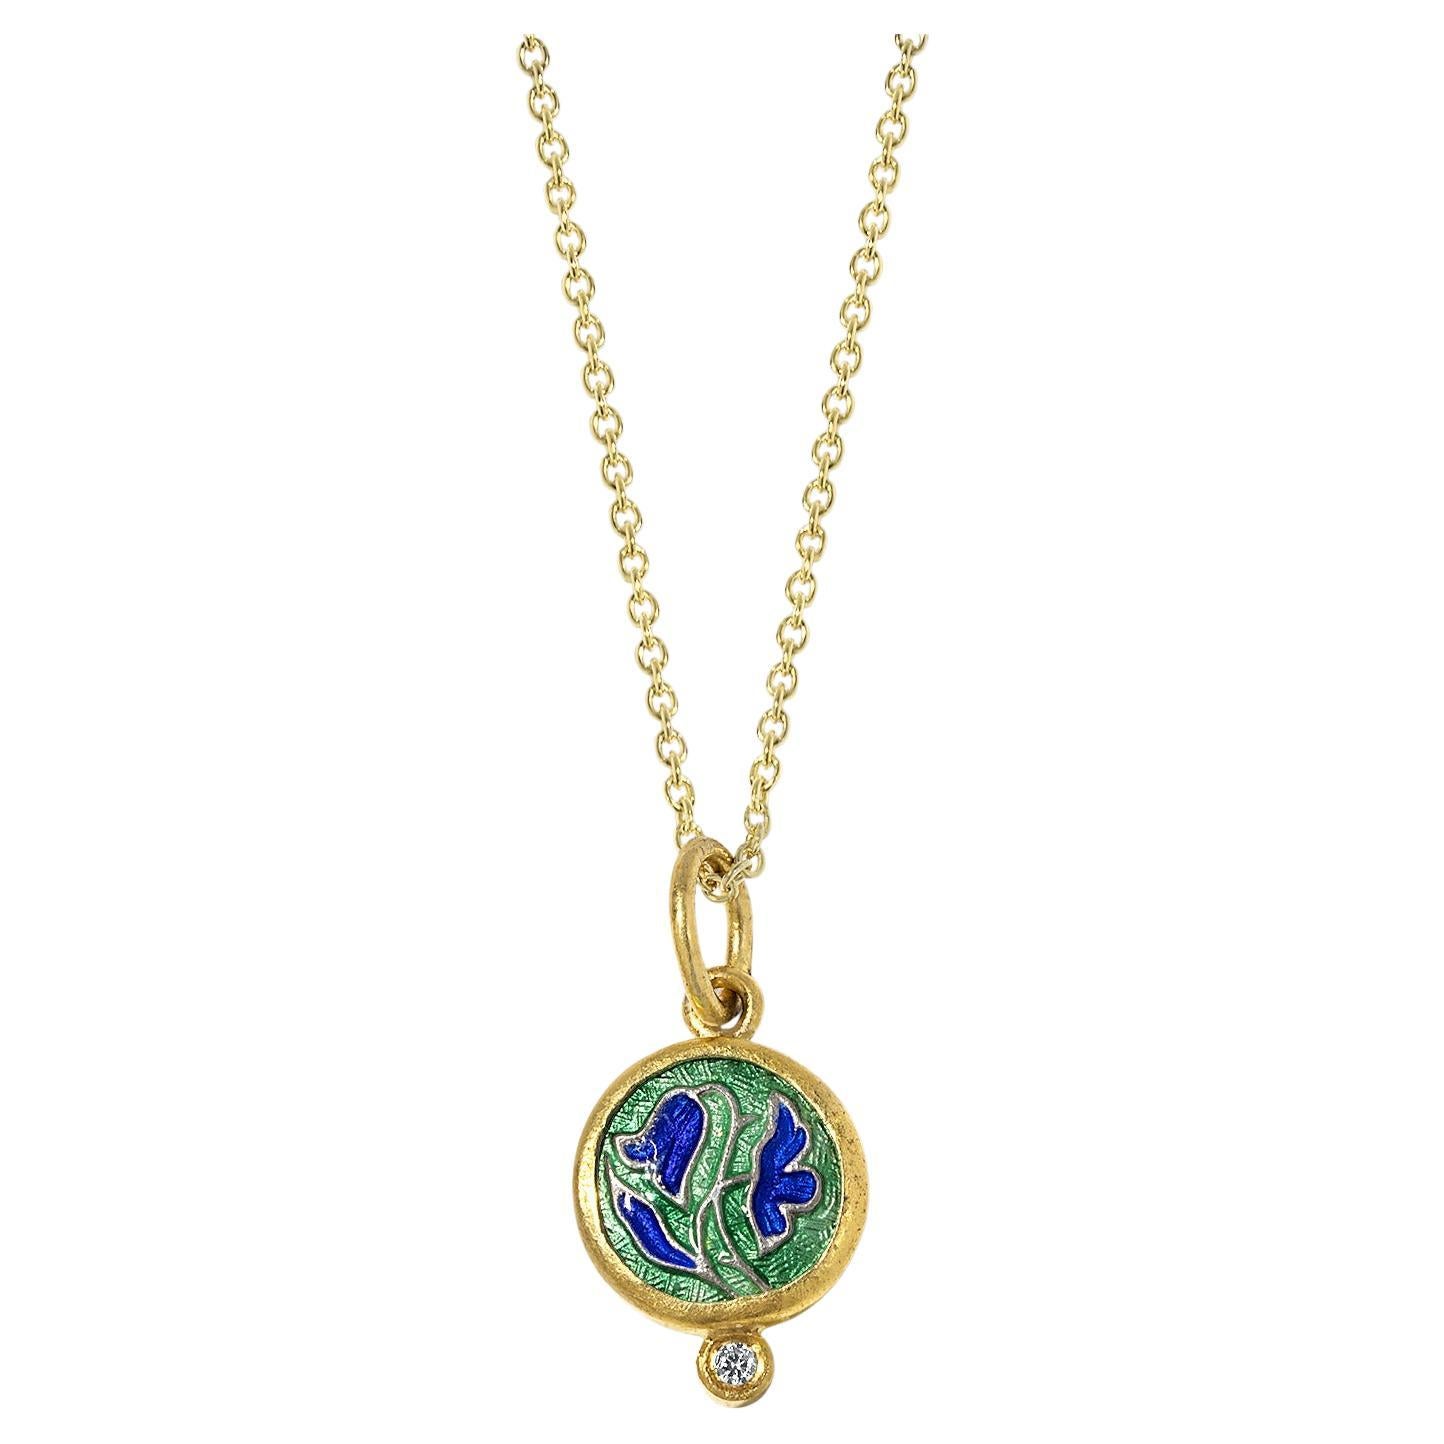 Enamel Tulips Charm in Green & Blue, Amulet Pendant Necklace w/ Diamond 24k Gold